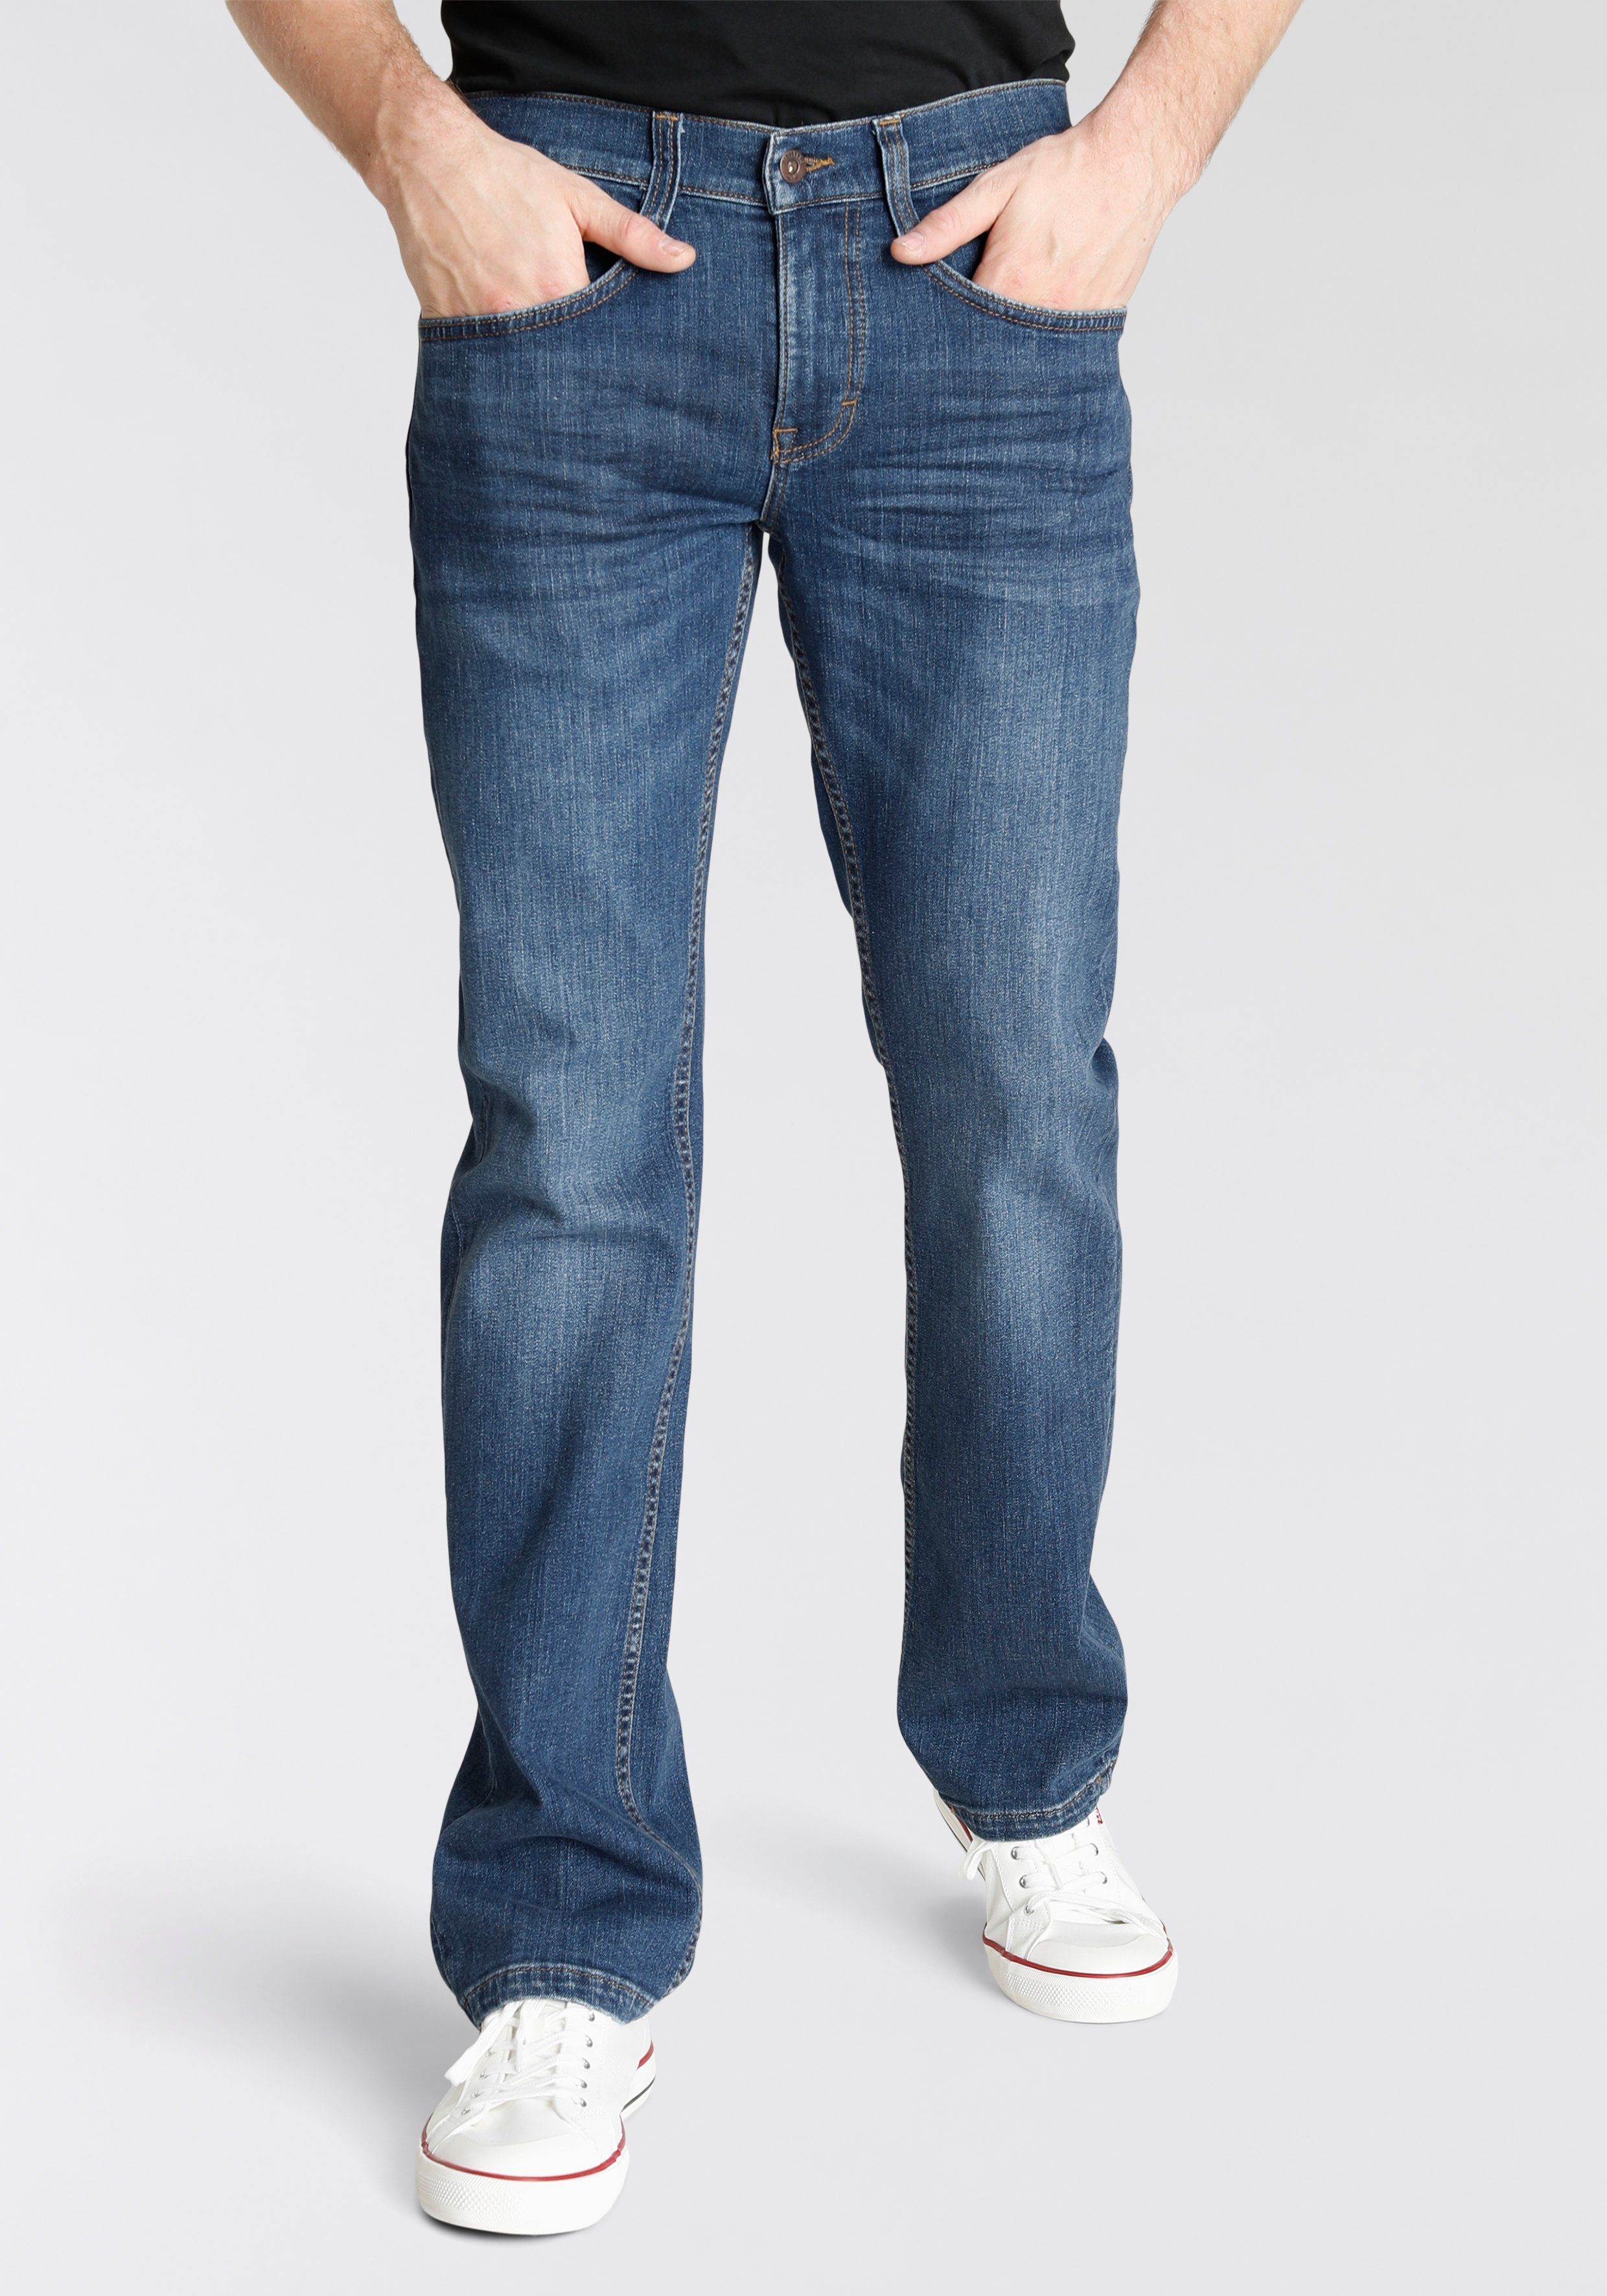 voll aufgeladen OREGON dark wash Bootcut-Jeans blue STYLE MUSTANG BOOTCUT